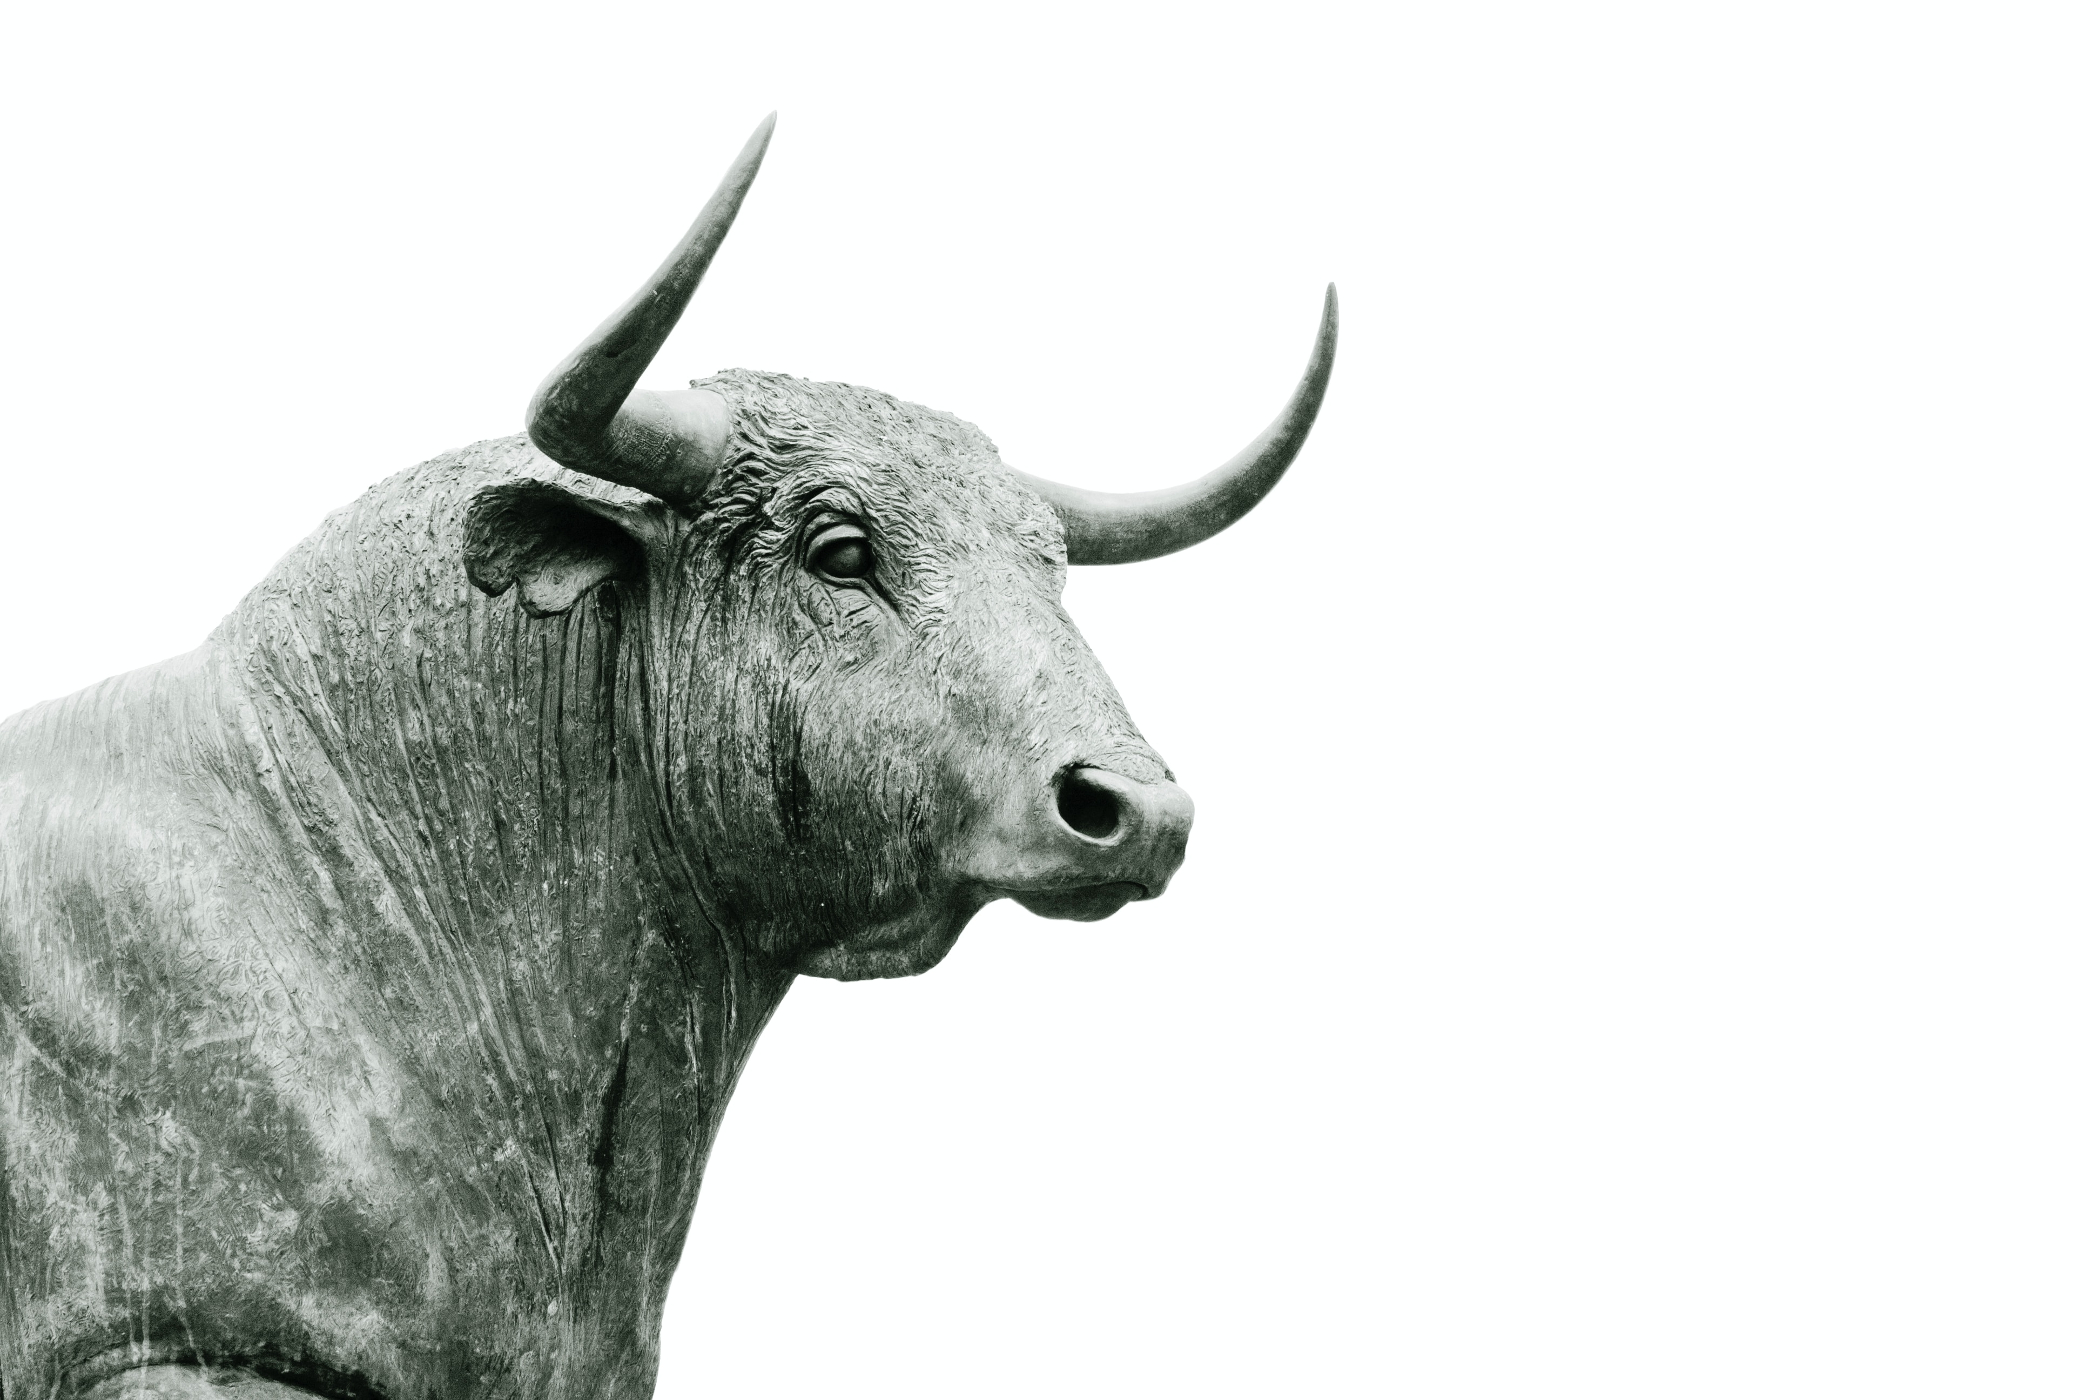 A statue of a bull. | Source: Unsplash